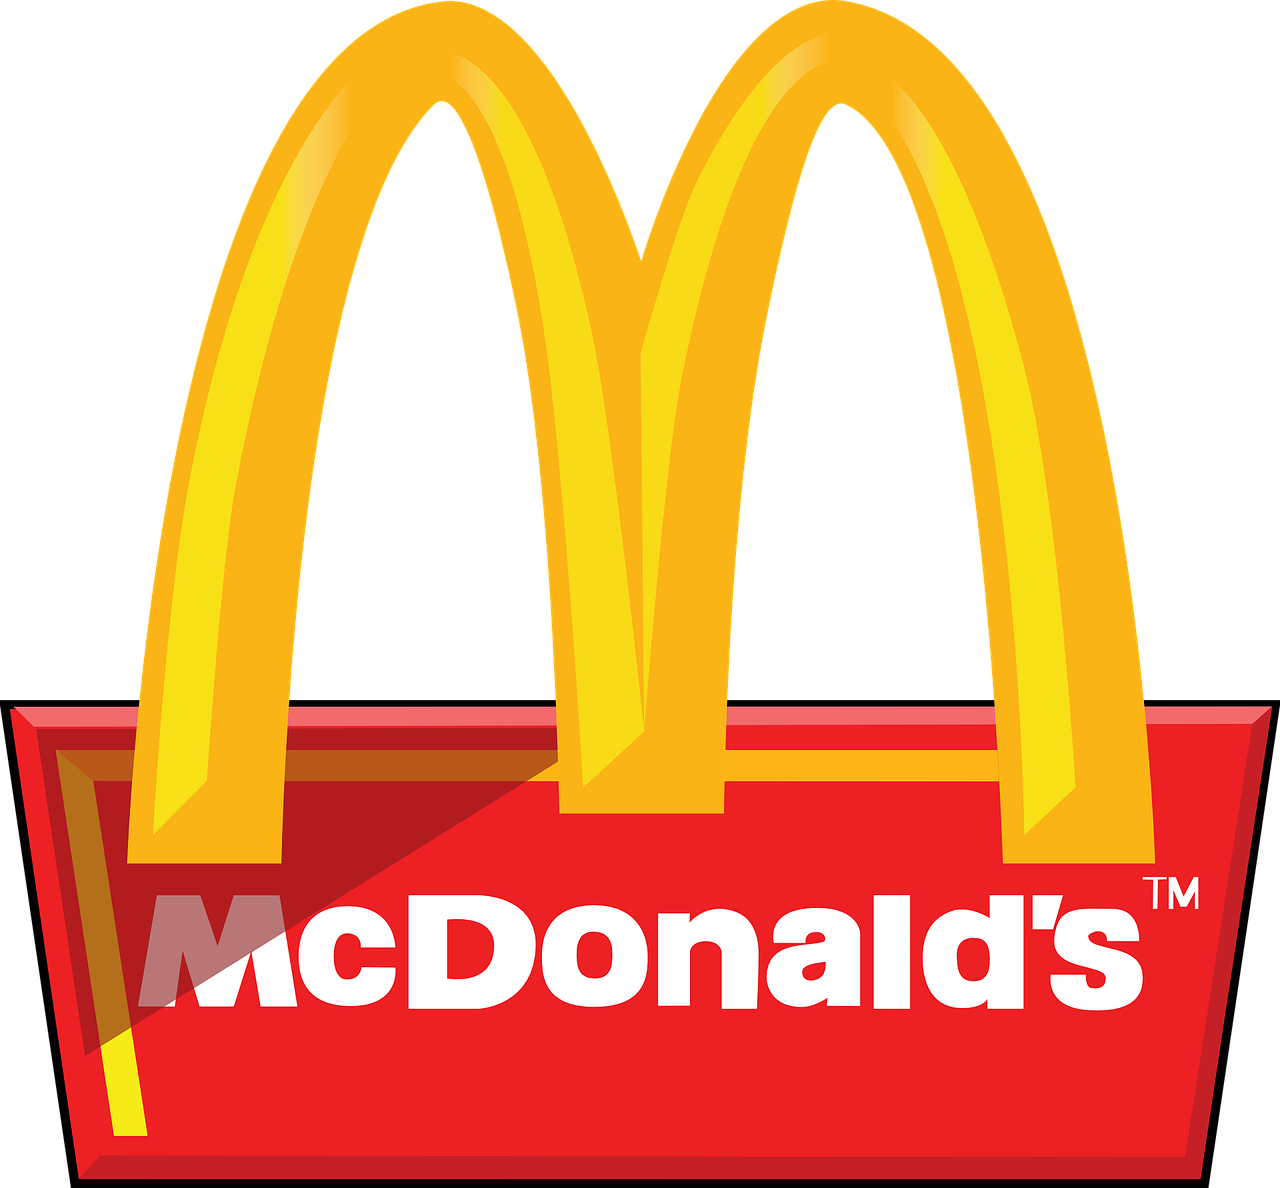 McDonald's's Image